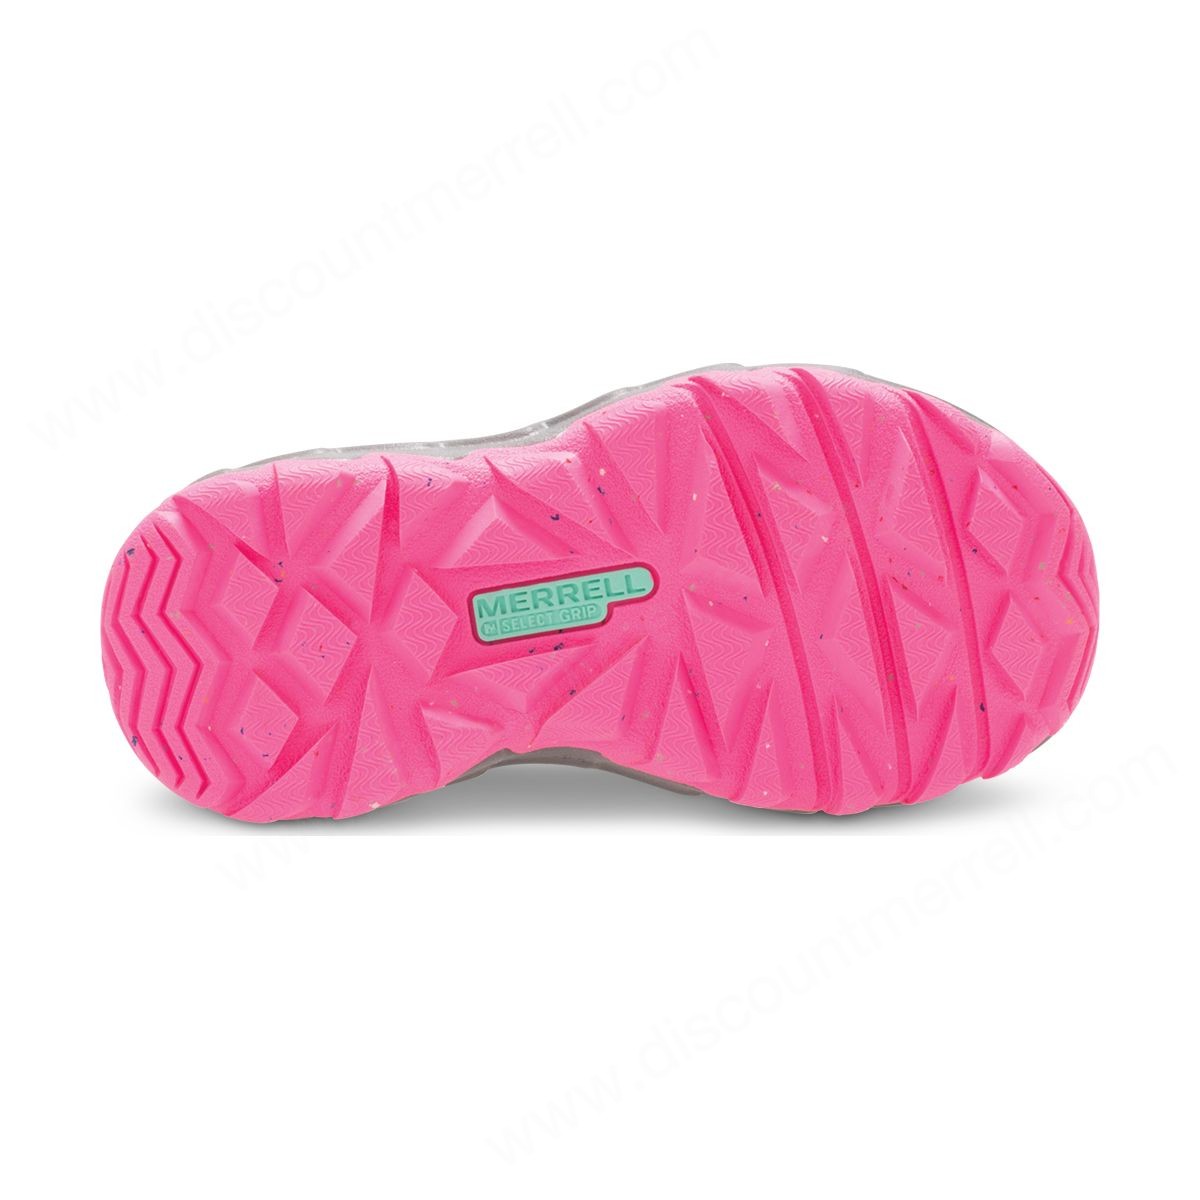 Merrell Little Kid's Hydro Junior . Sneakers Sandal Grey/pink - -3